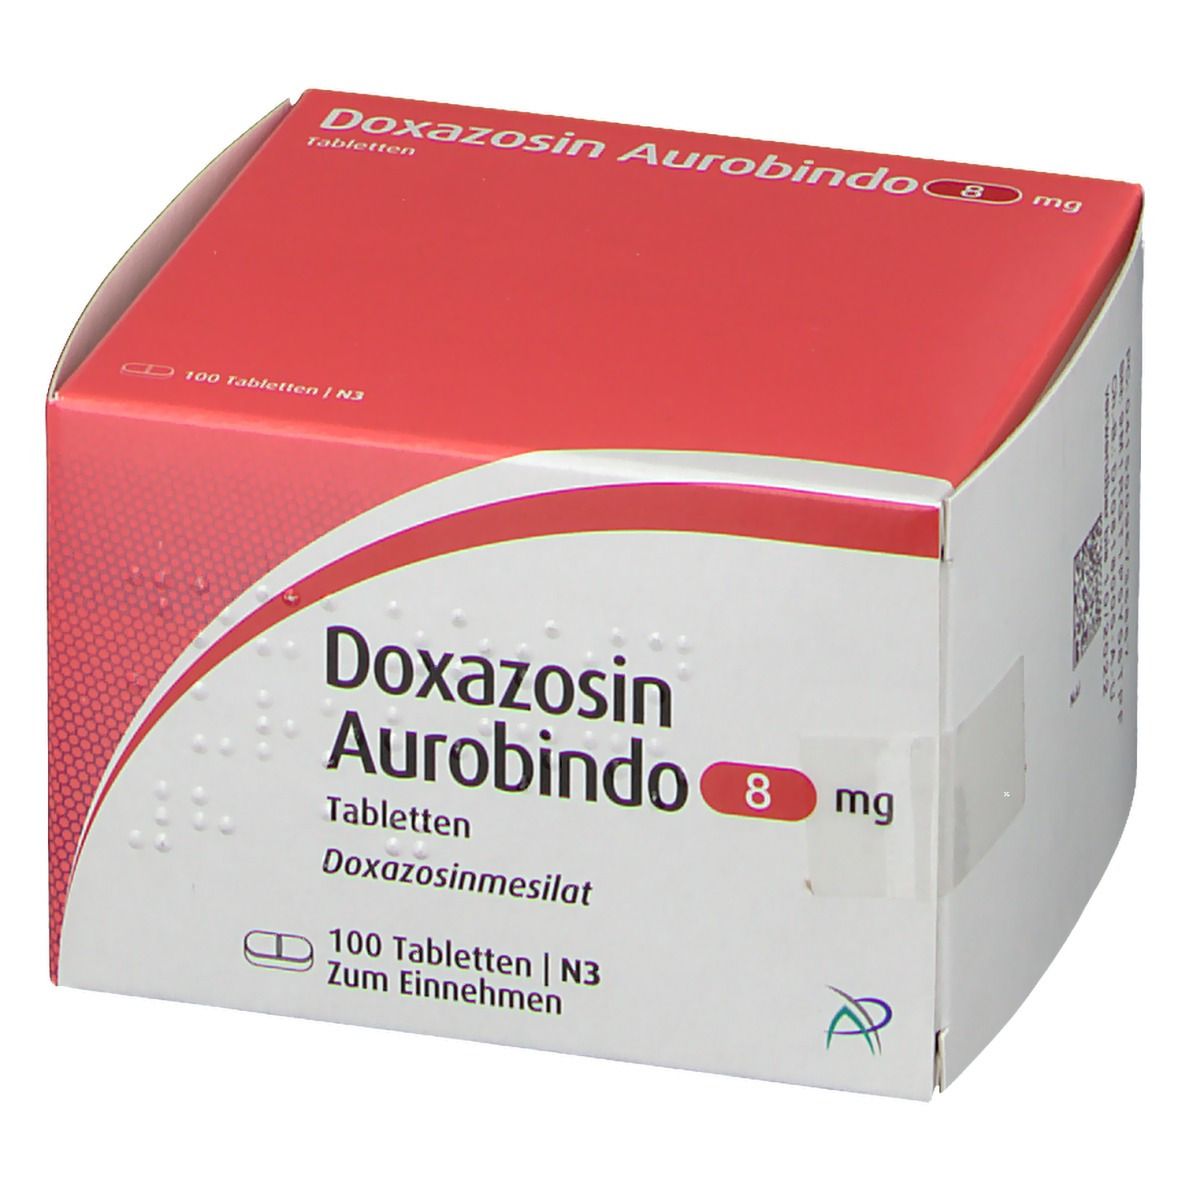 Doxazosin Aurobindo 8 mg